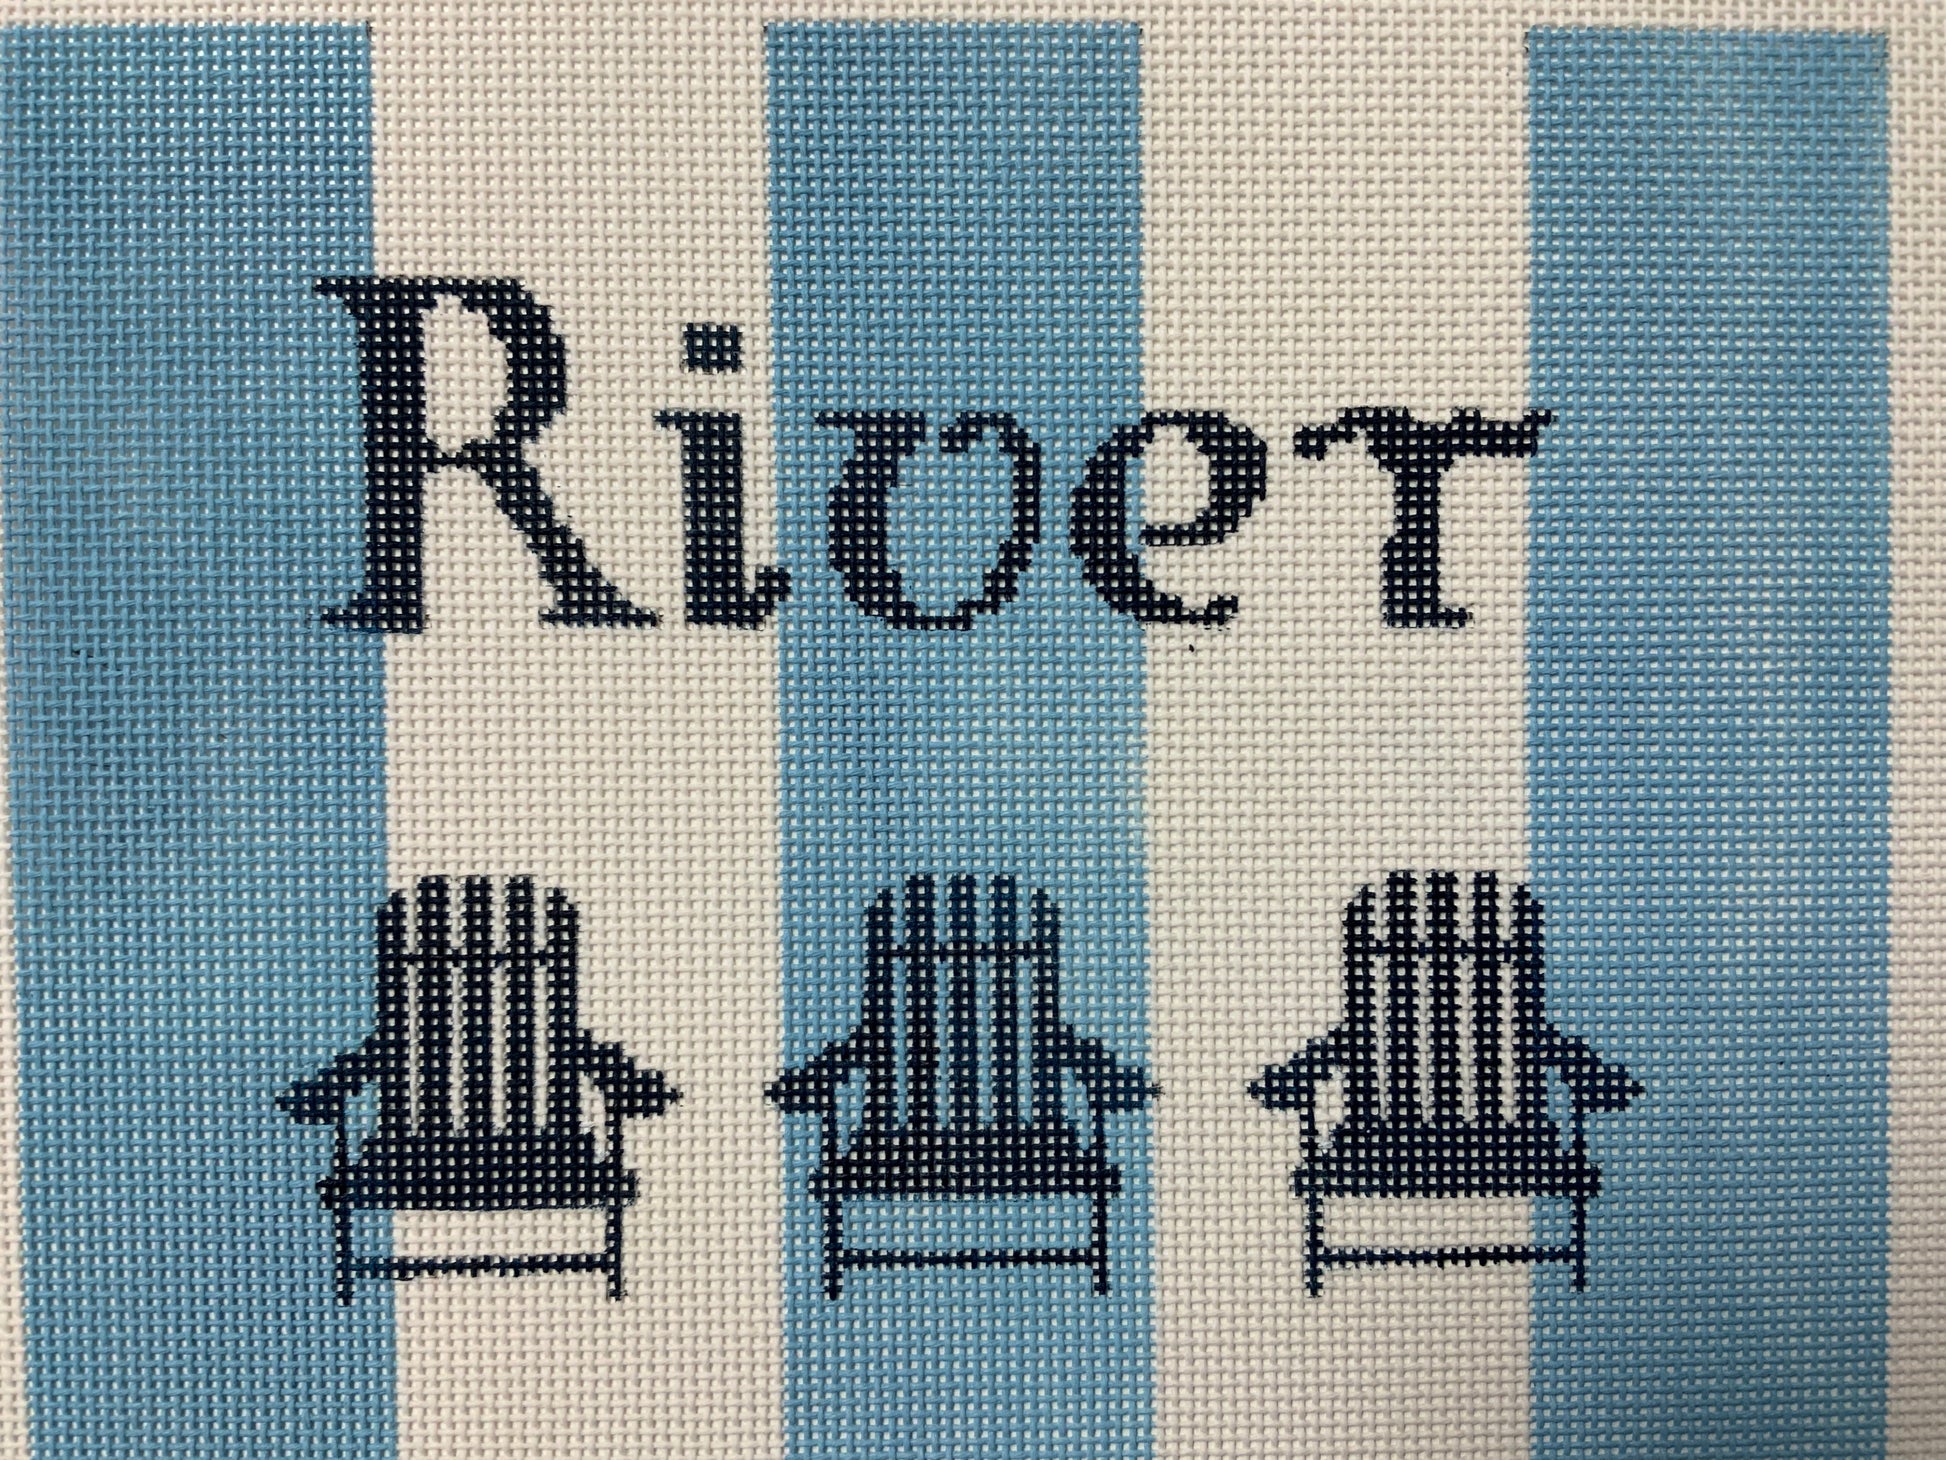 River on Blue Stripes Needlecraft Canvas